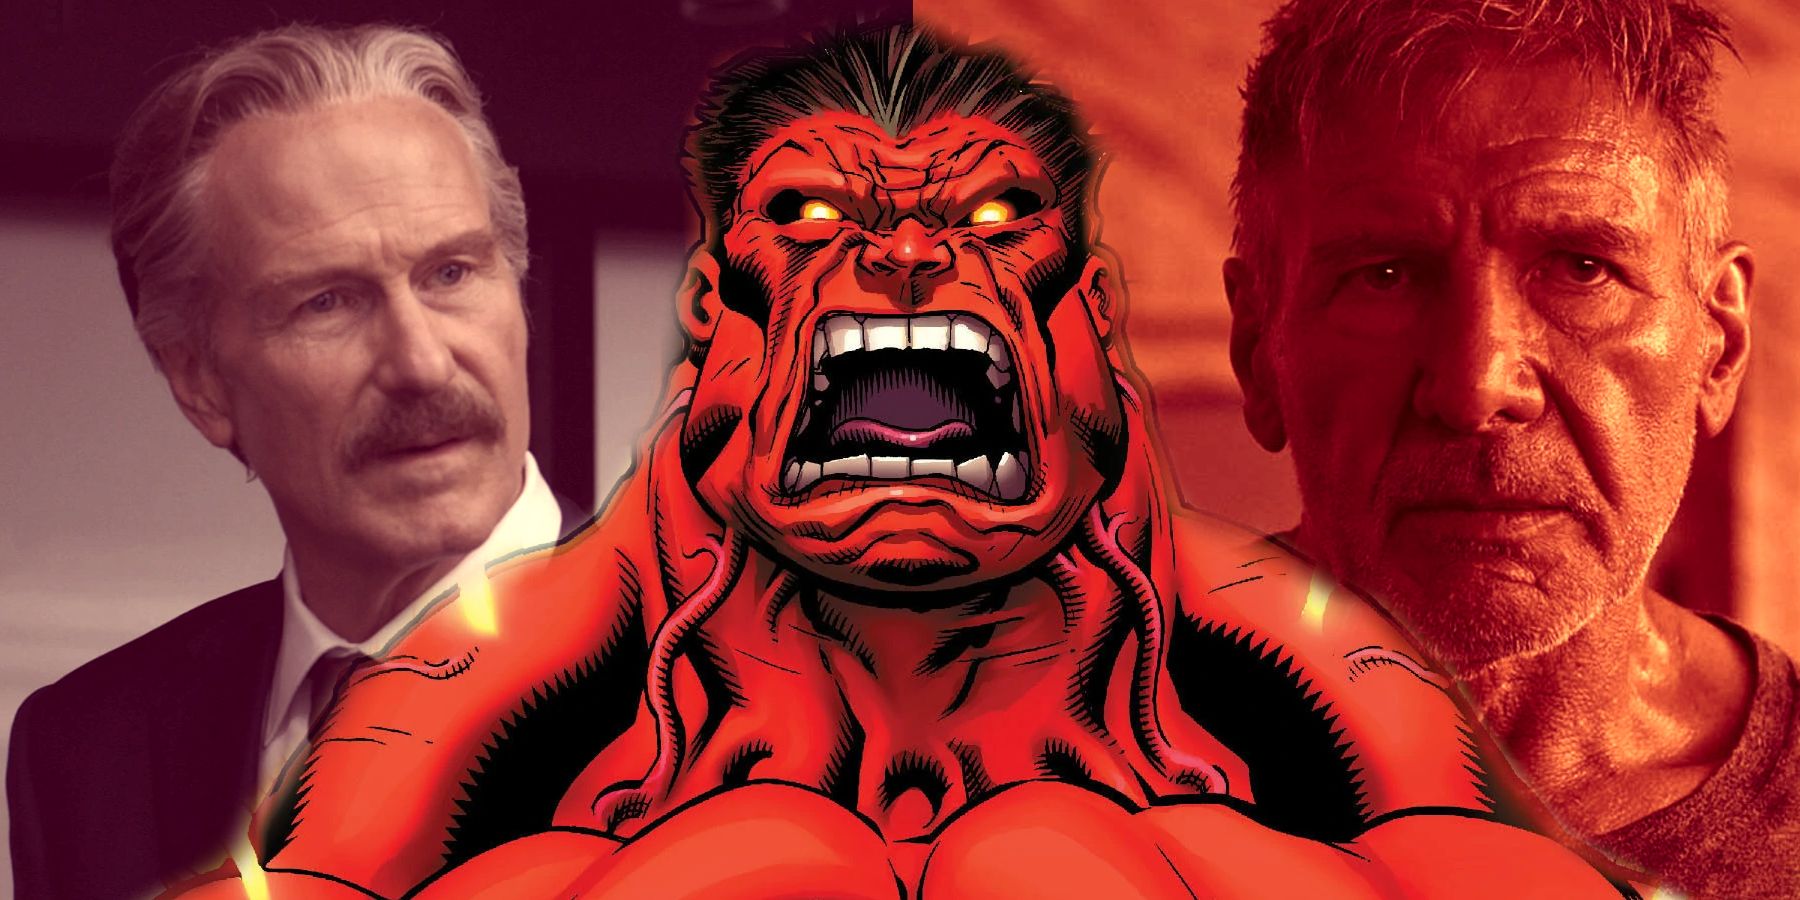 Shared image: General Ross (William Hurt) looks worried;  cartoon Red Hulk screams in rage;  Harrison Ford as Deckard Shaw in Blade Runner 2049